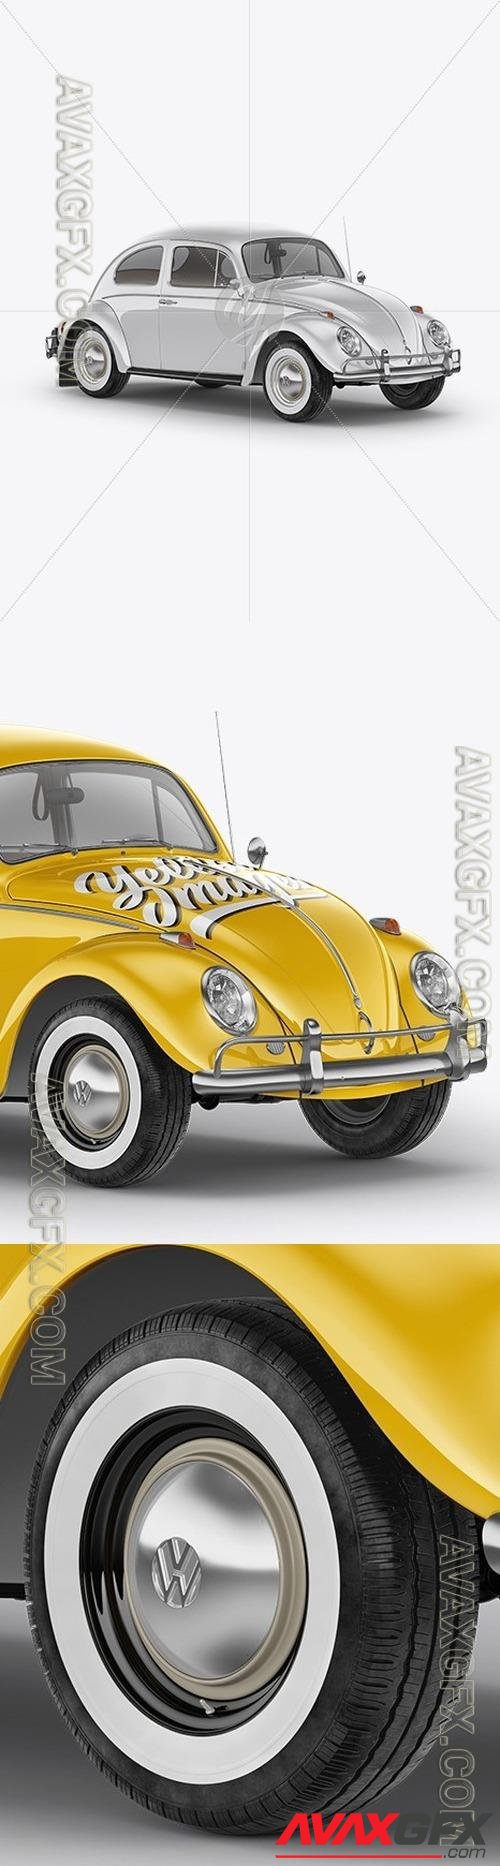 Volkswagen Beetle Mockup - Half Side View 23000